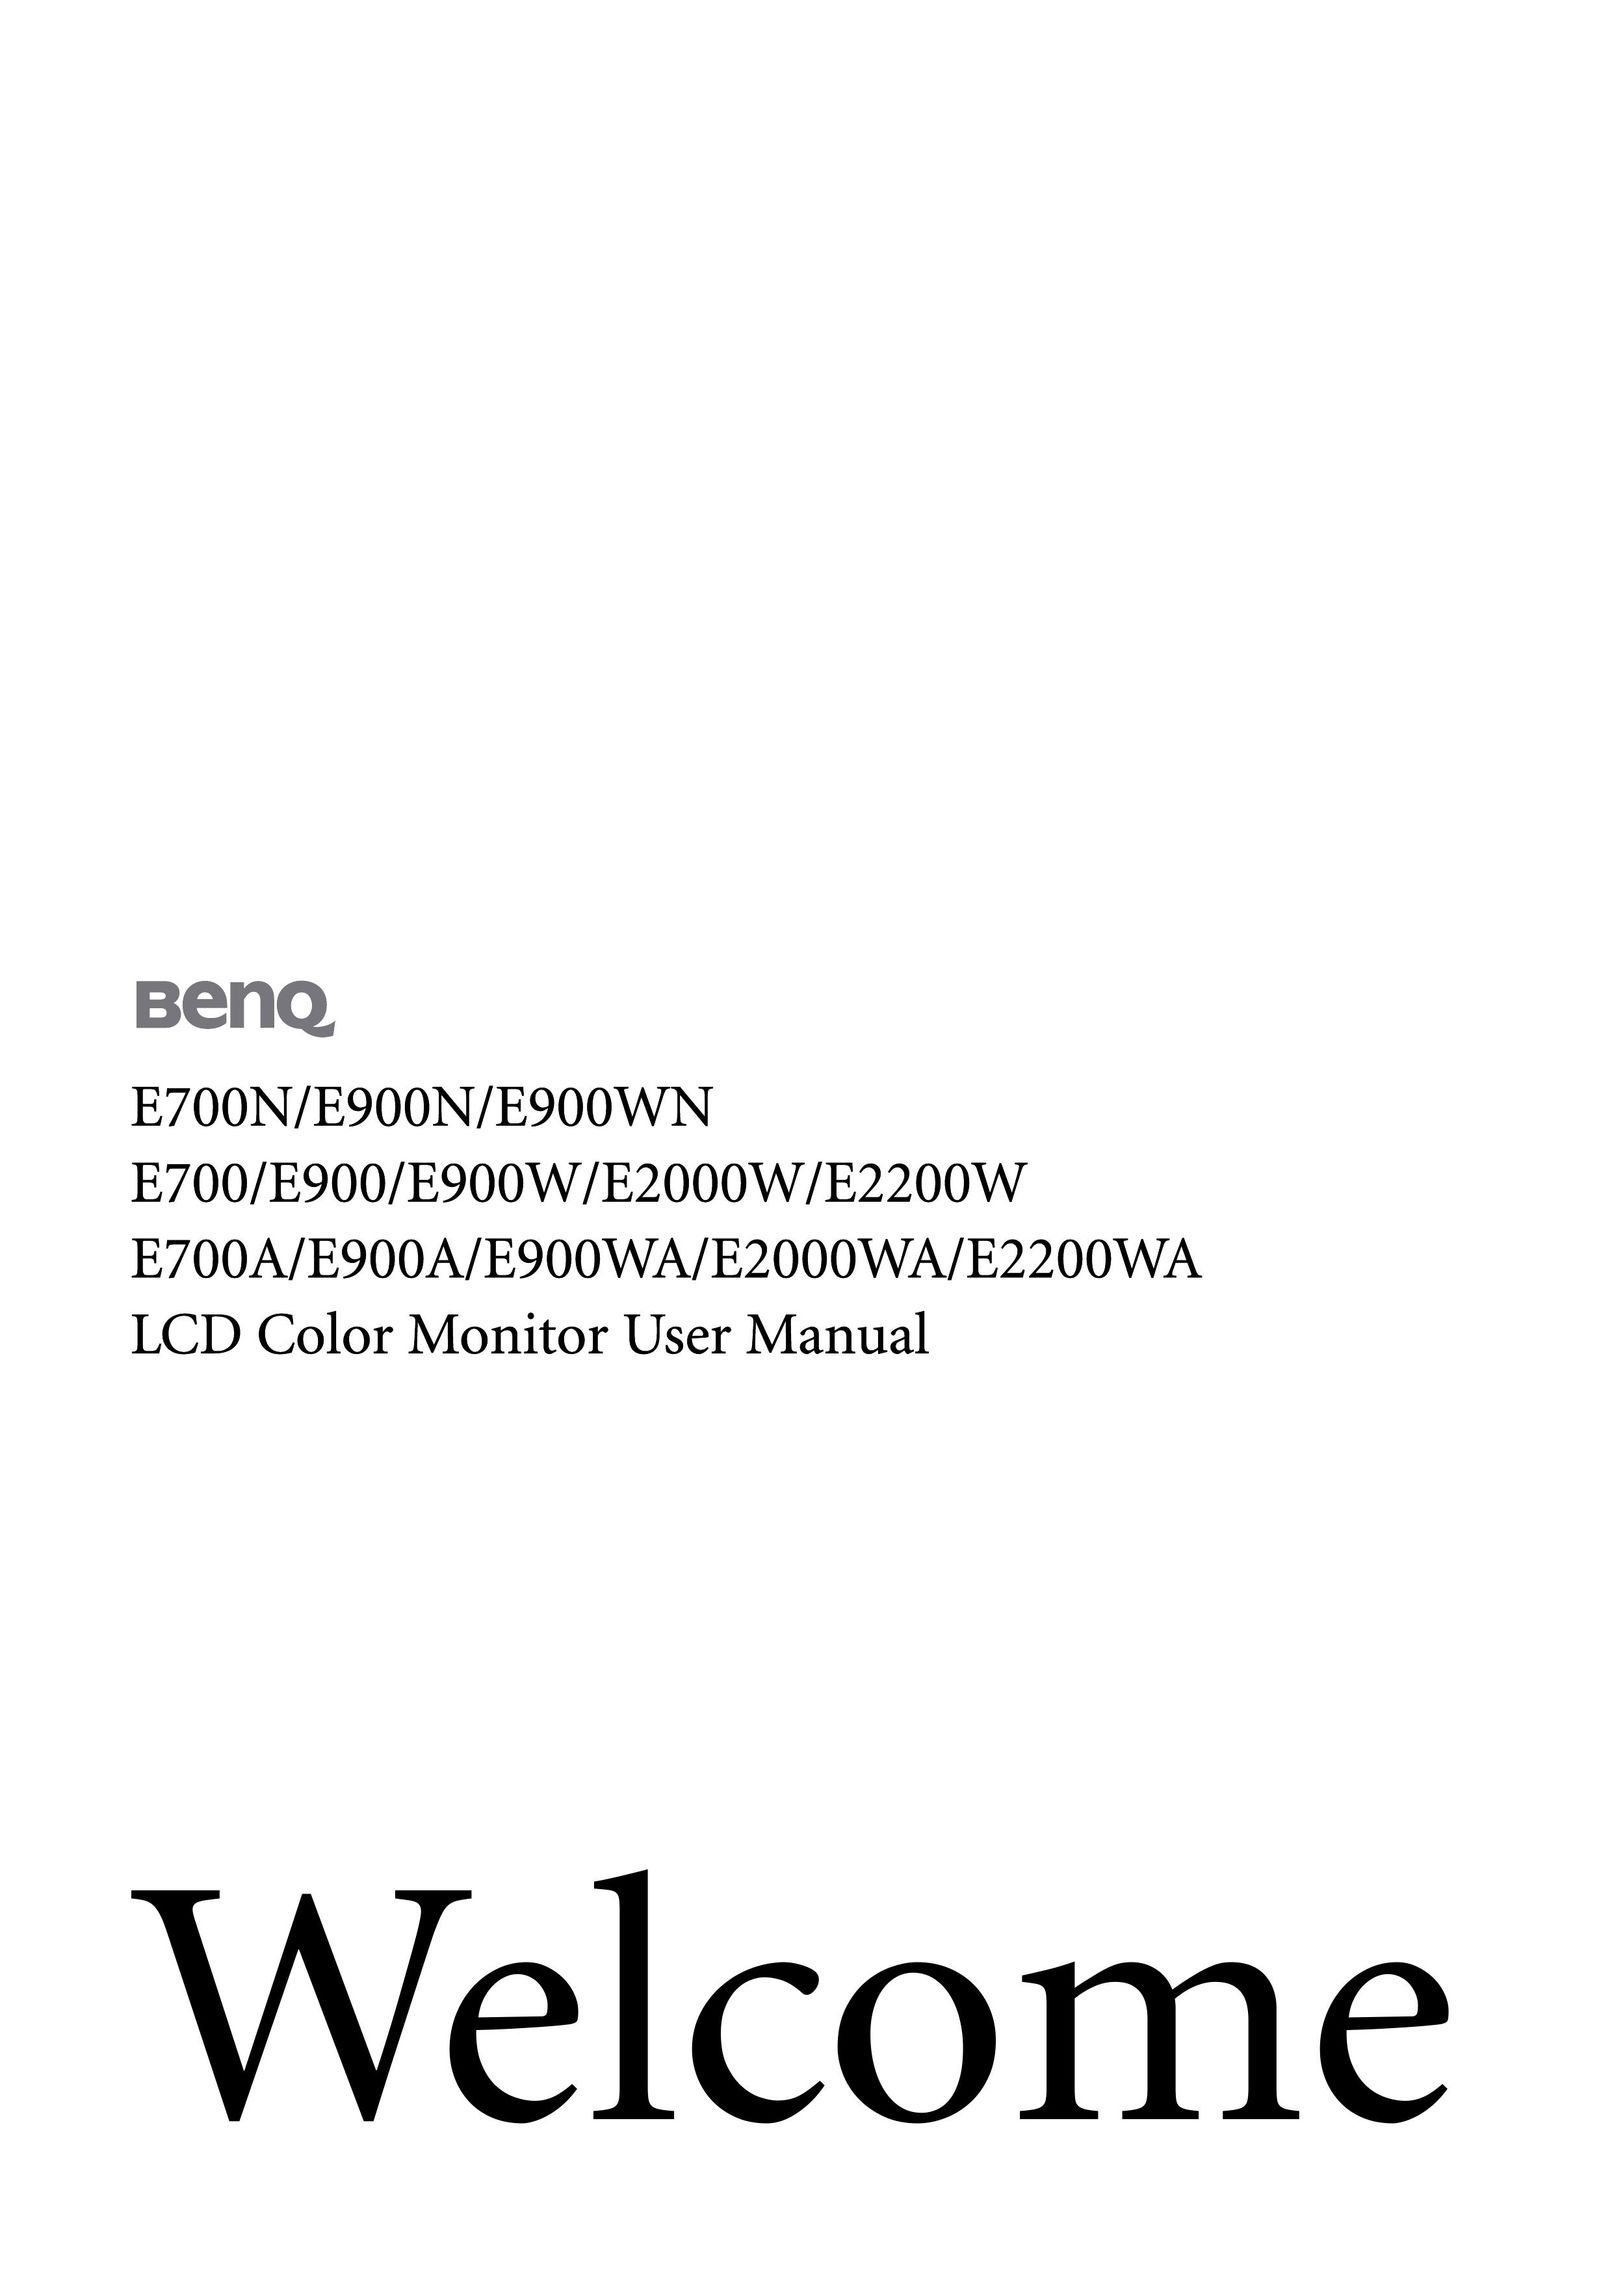 BenQ E2200W Computer Monitor User Manual (Page 1)